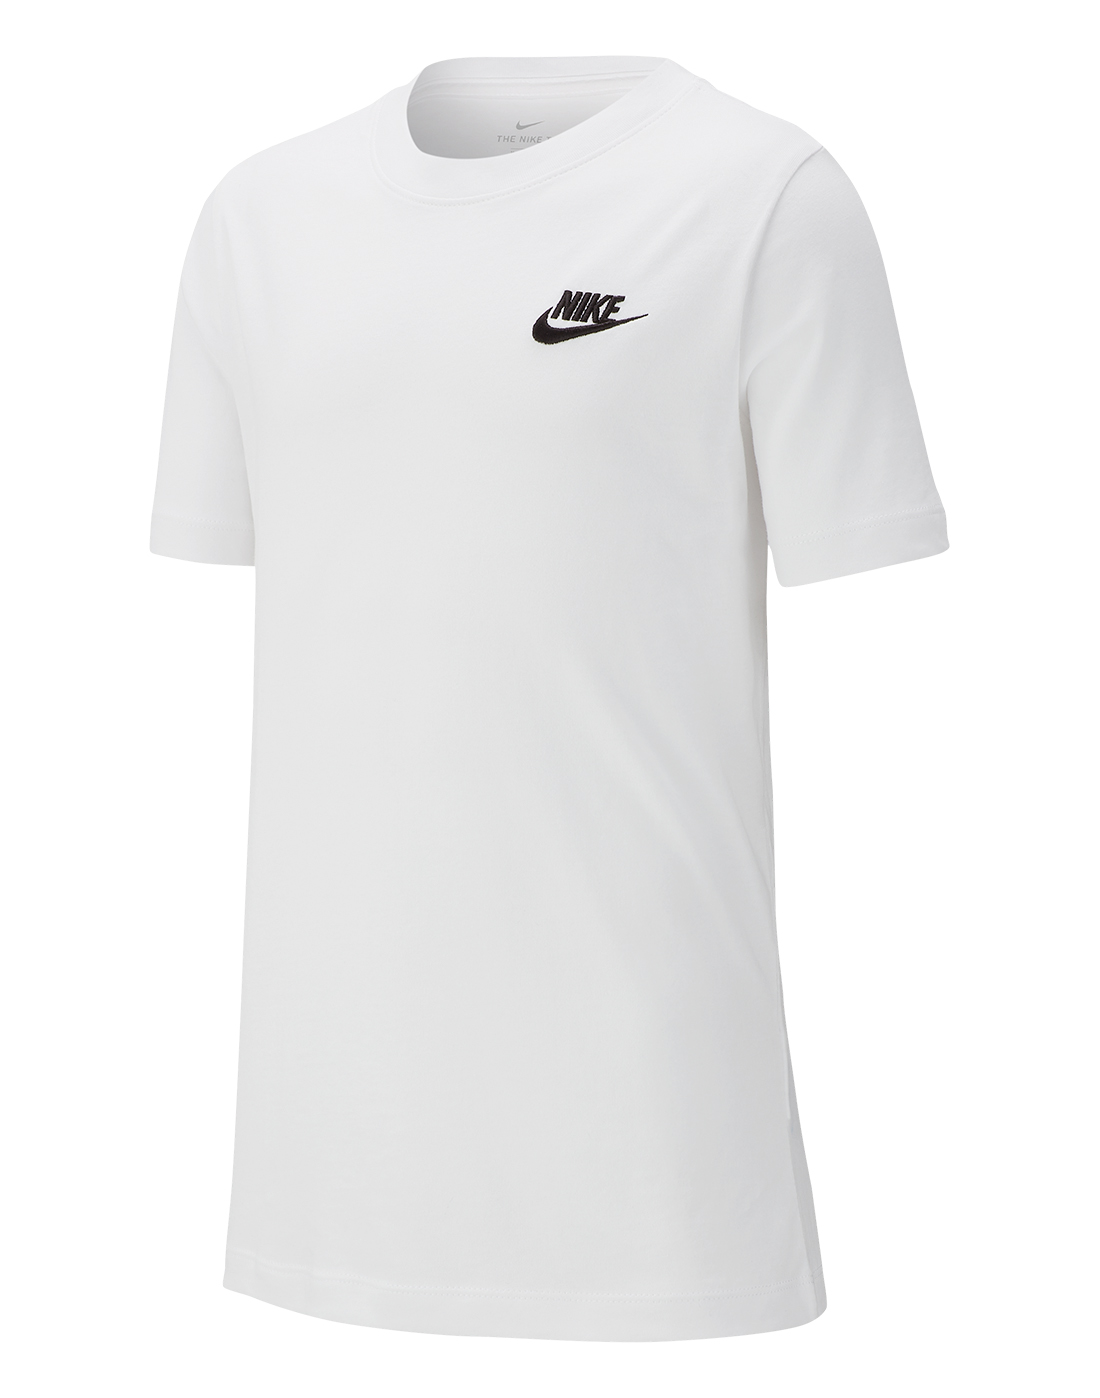 Boy's Plain White Nike T-Shirt | Life Style Sports